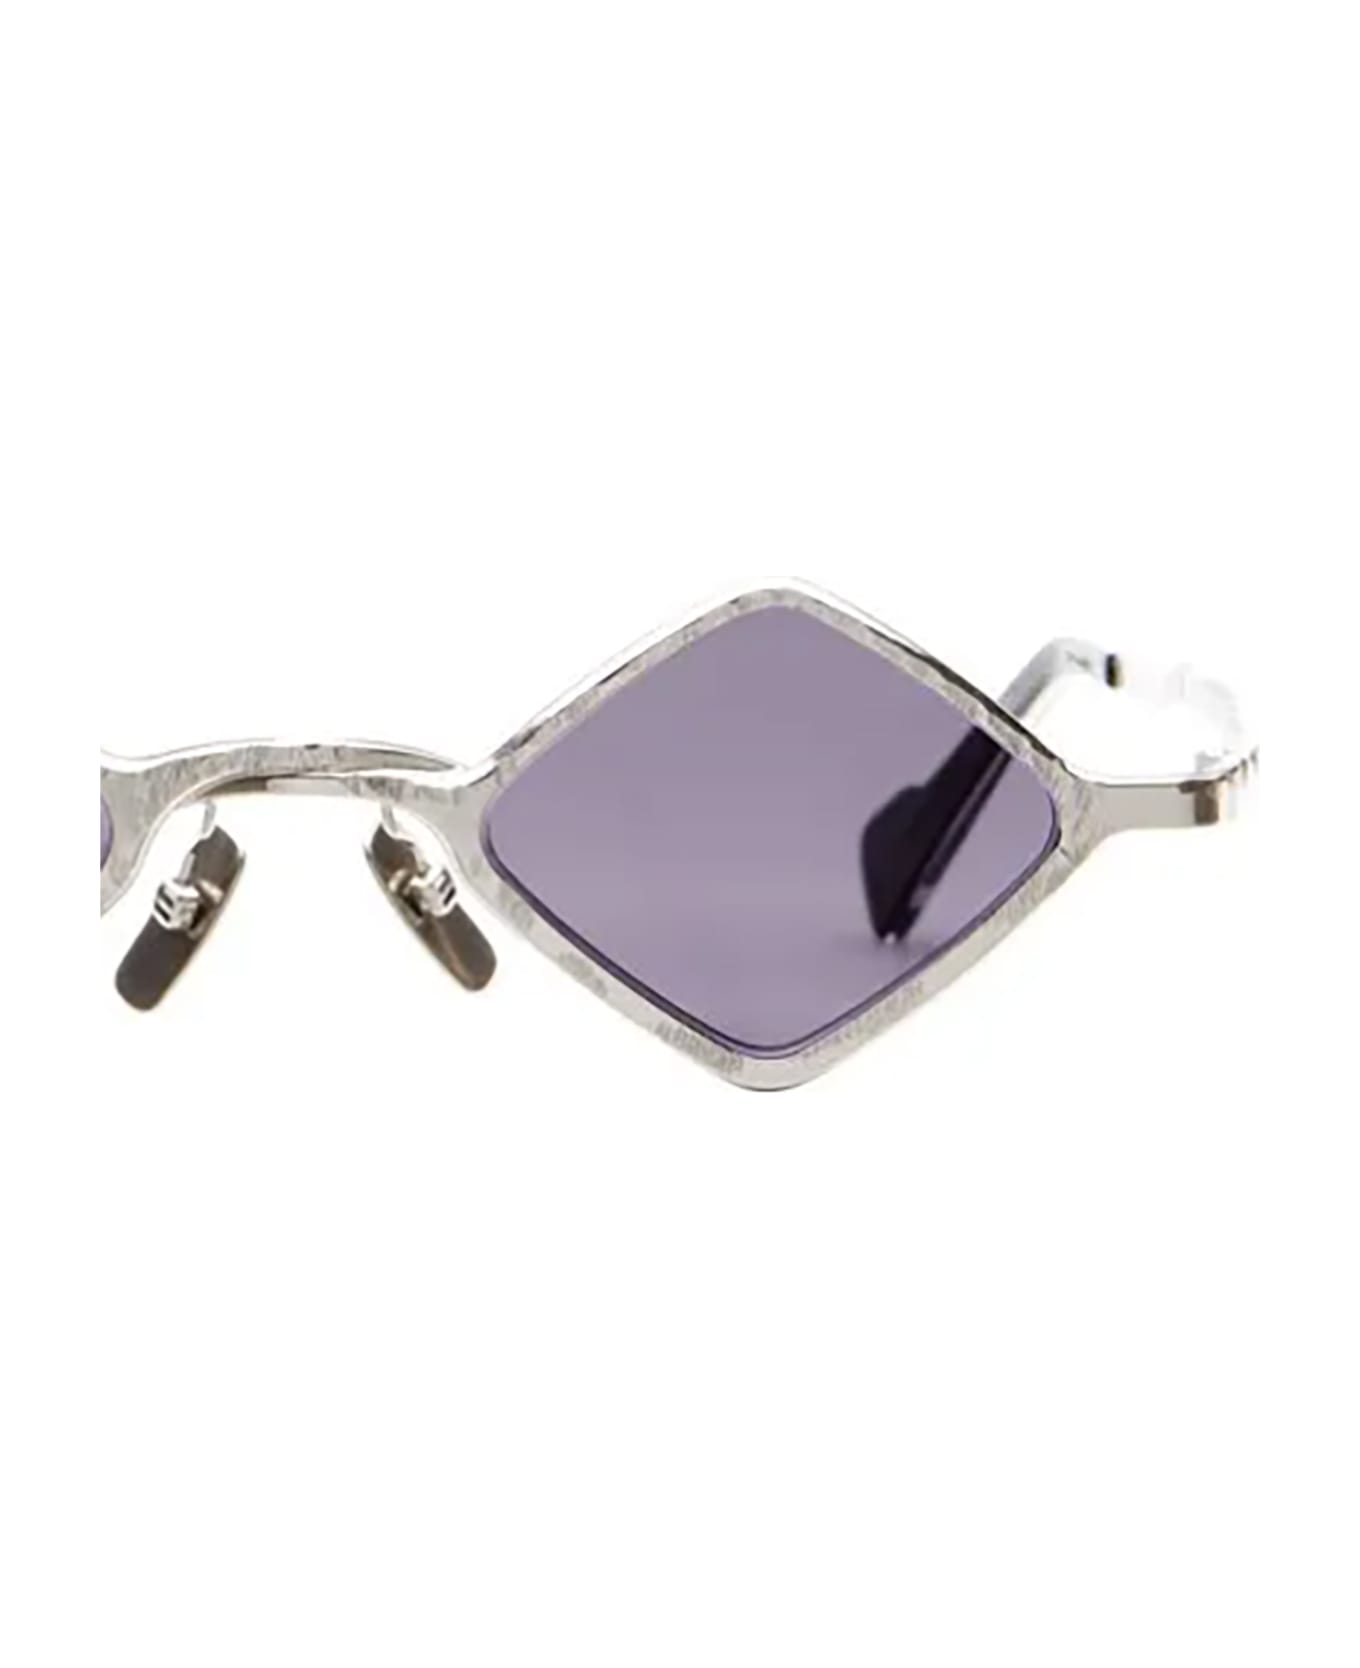 Kuboraum Z14 Sunglasses - Siv Violet サングラス